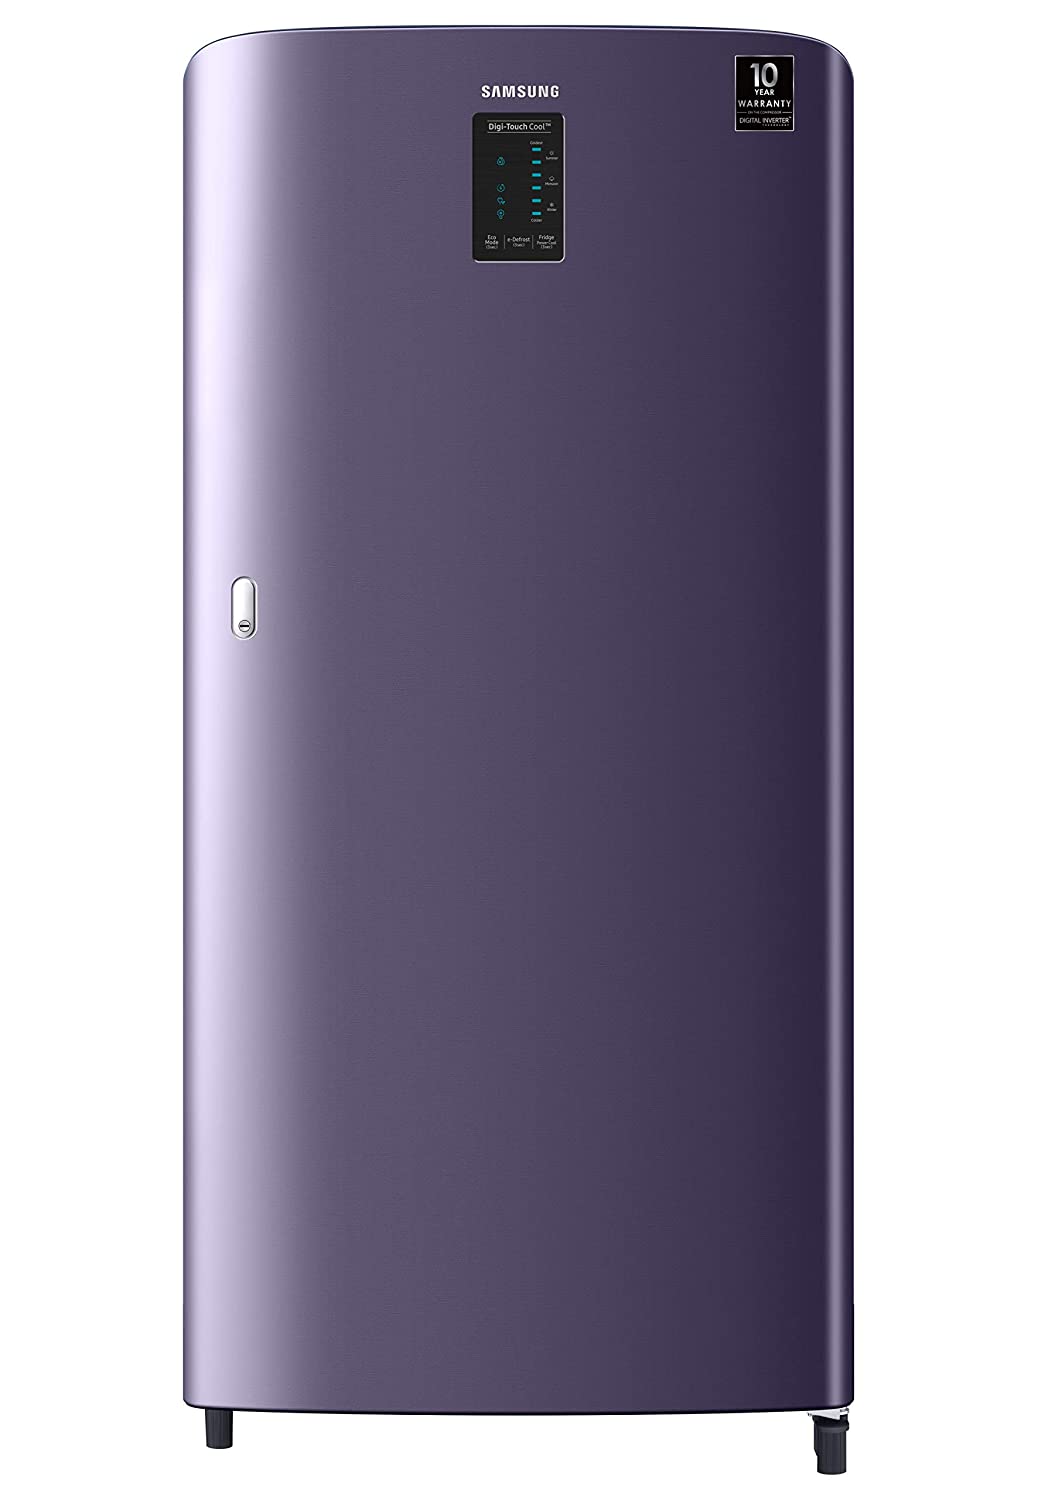 Samsung 198 litre fridge 3 star price